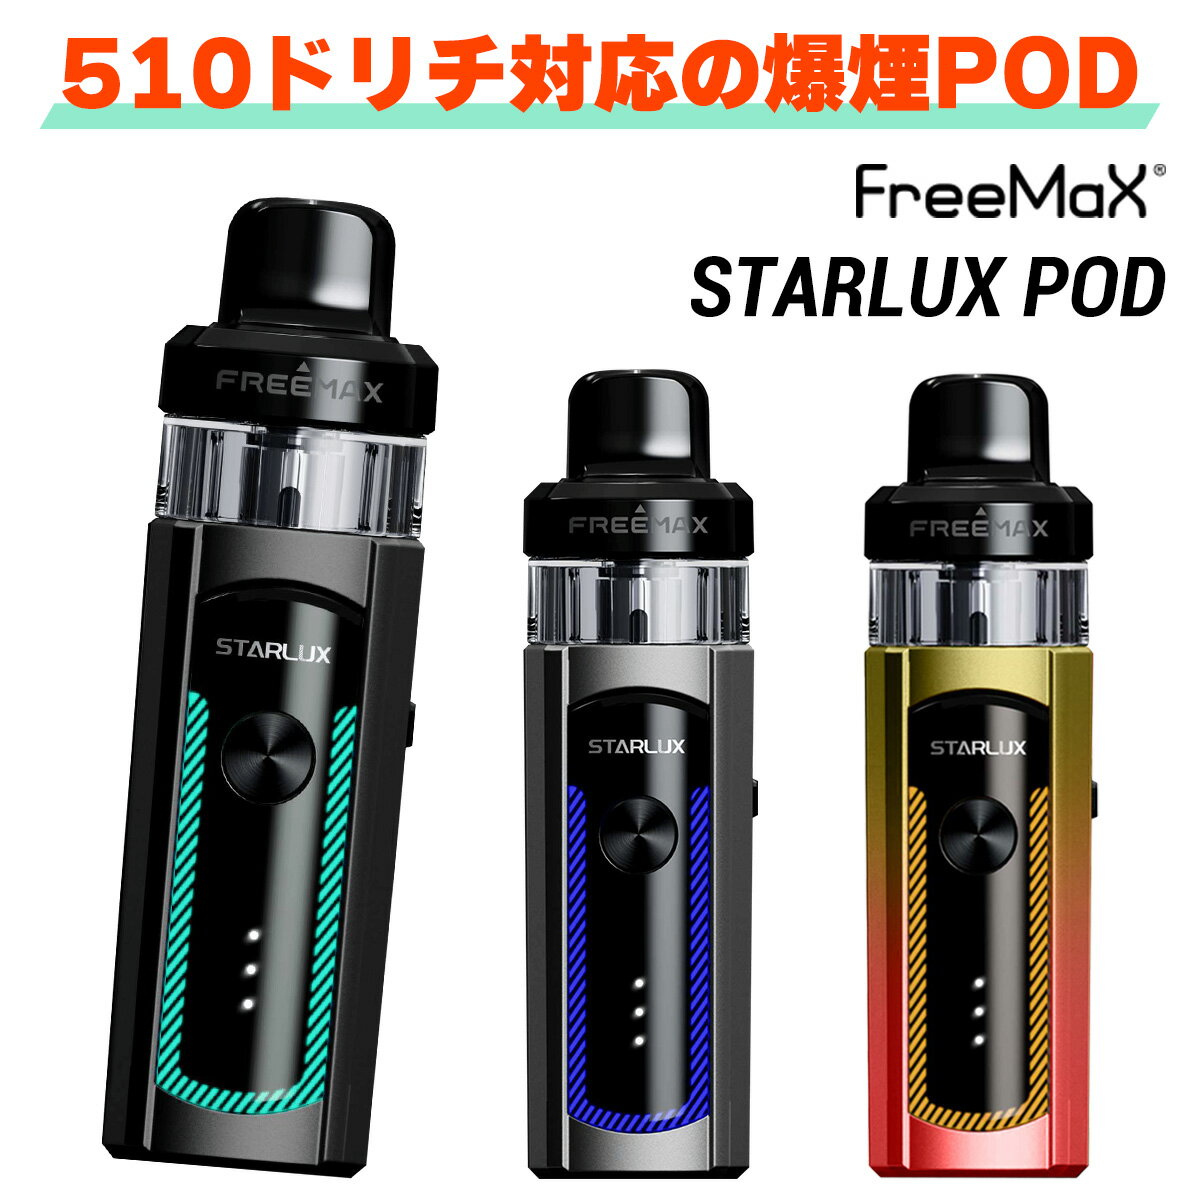 Freemax Starlux POD フリーマックス スターラックス ポッド 電子タバコ 水蒸気 vape ベイプ ベープ 電子タバコ タール ニコチン0 pod型 初心者 おすすめ 爆煙 vape pod メール便無料